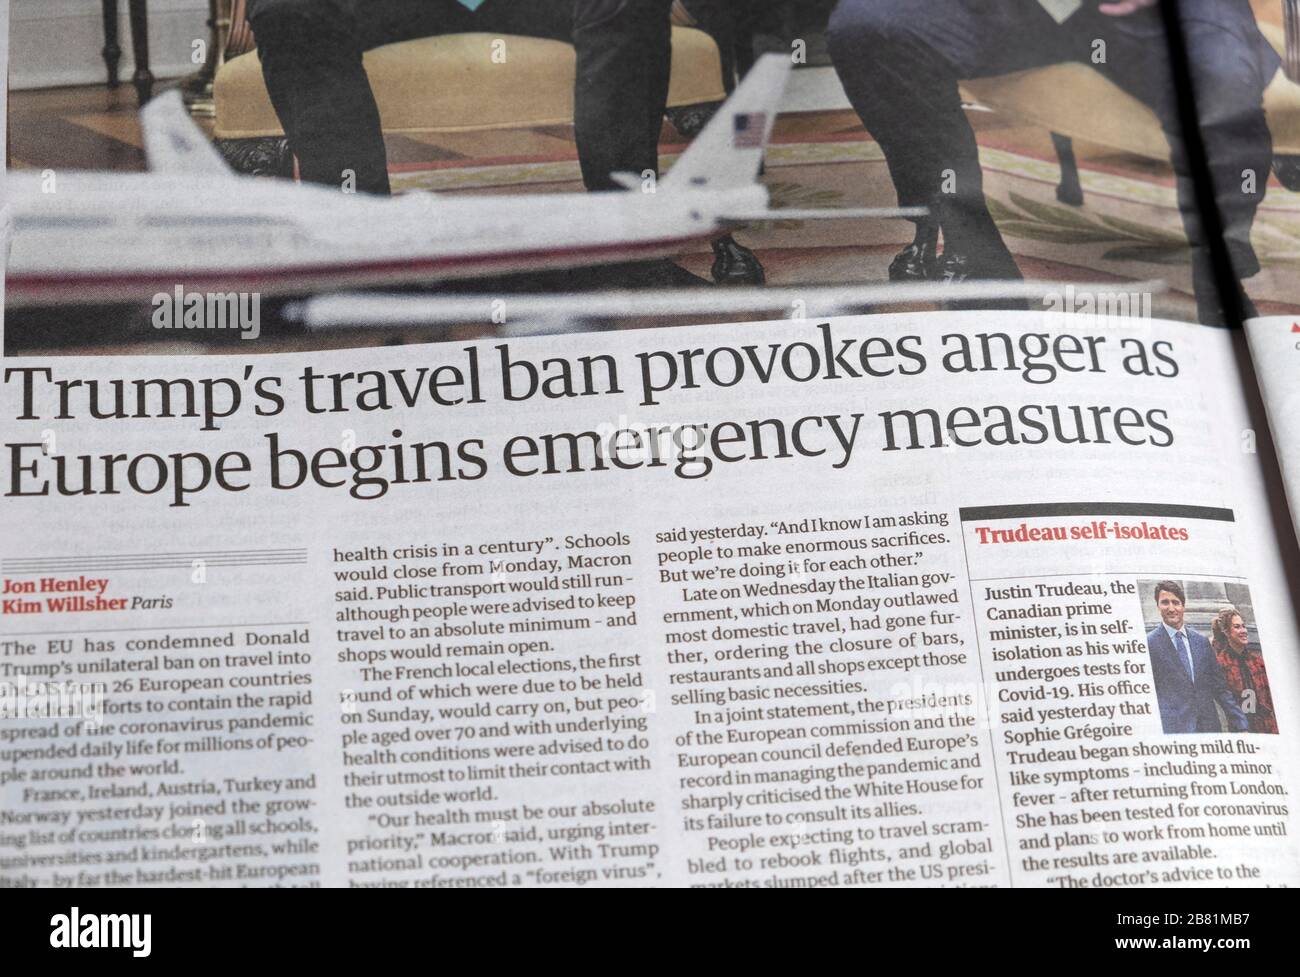 'Trump's travel ban provokes anger as Europe begins emergency measures' Coronavirus pandemic newspaper headline in Guardian on 13 March 2020 London UK Stock Photo